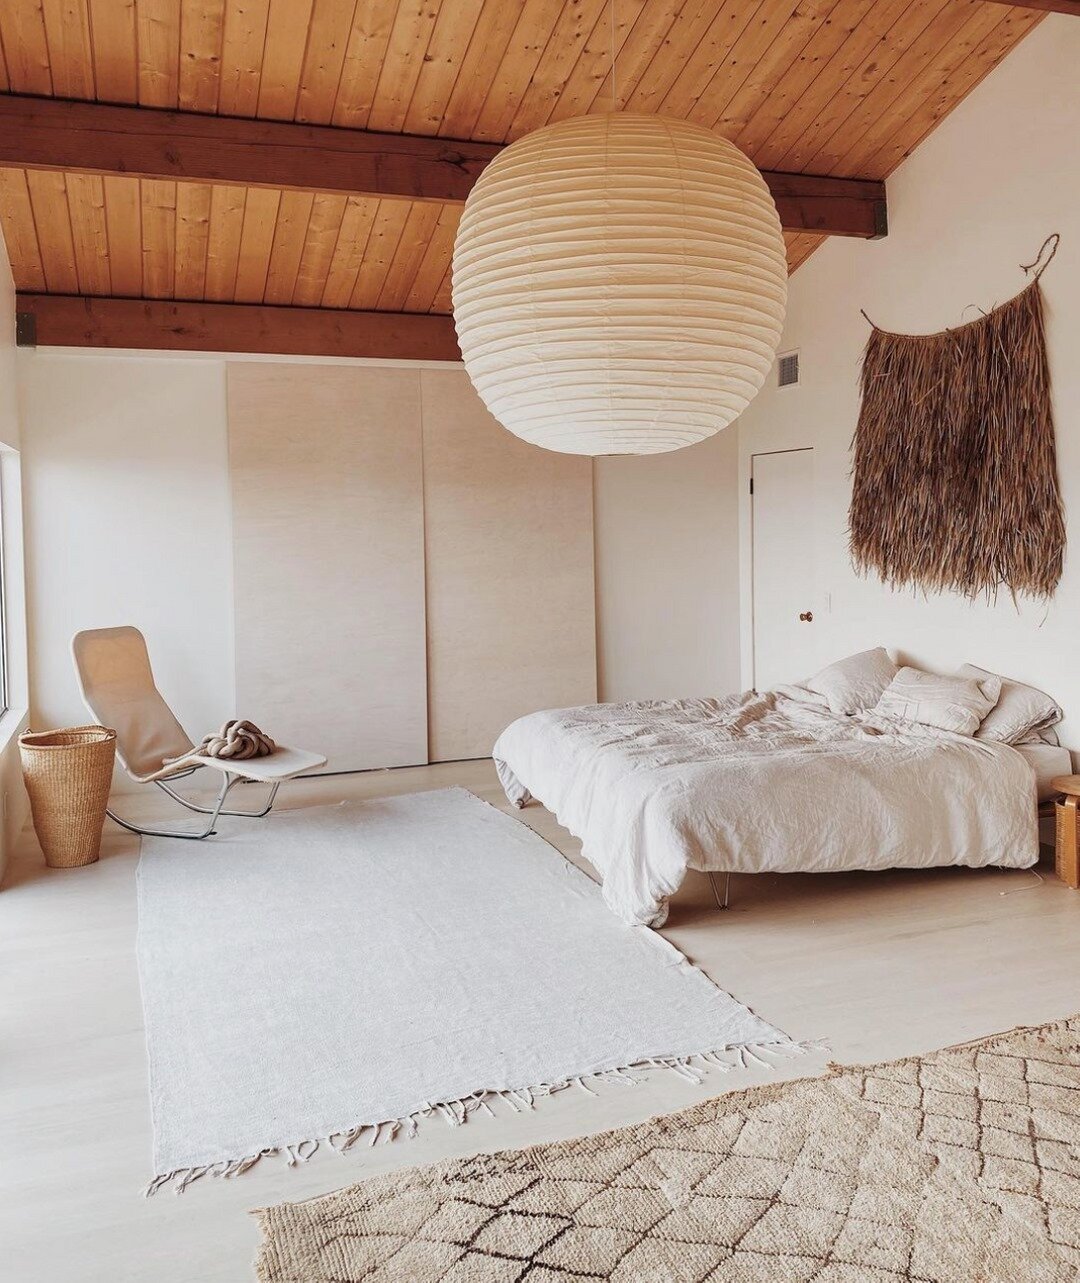 modern minimalist bedroom &mdash;⠀⠀⠀⠀⠀⠀⠀⠀⠀
⠀⠀⠀⠀⠀⠀⠀⠀⠀
via @maraserene⠀⠀⠀⠀⠀⠀⠀⠀⠀
⠀⠀⠀⠀⠀⠀⠀⠀⠀
⠀⠀⠀⠀⠀⠀⠀⠀⠀
#minimalist #modernminimalist #natural  #interiorstyling #minimalmood #japaneseminimalist #scandinaviandesign #wabisabi #hygge